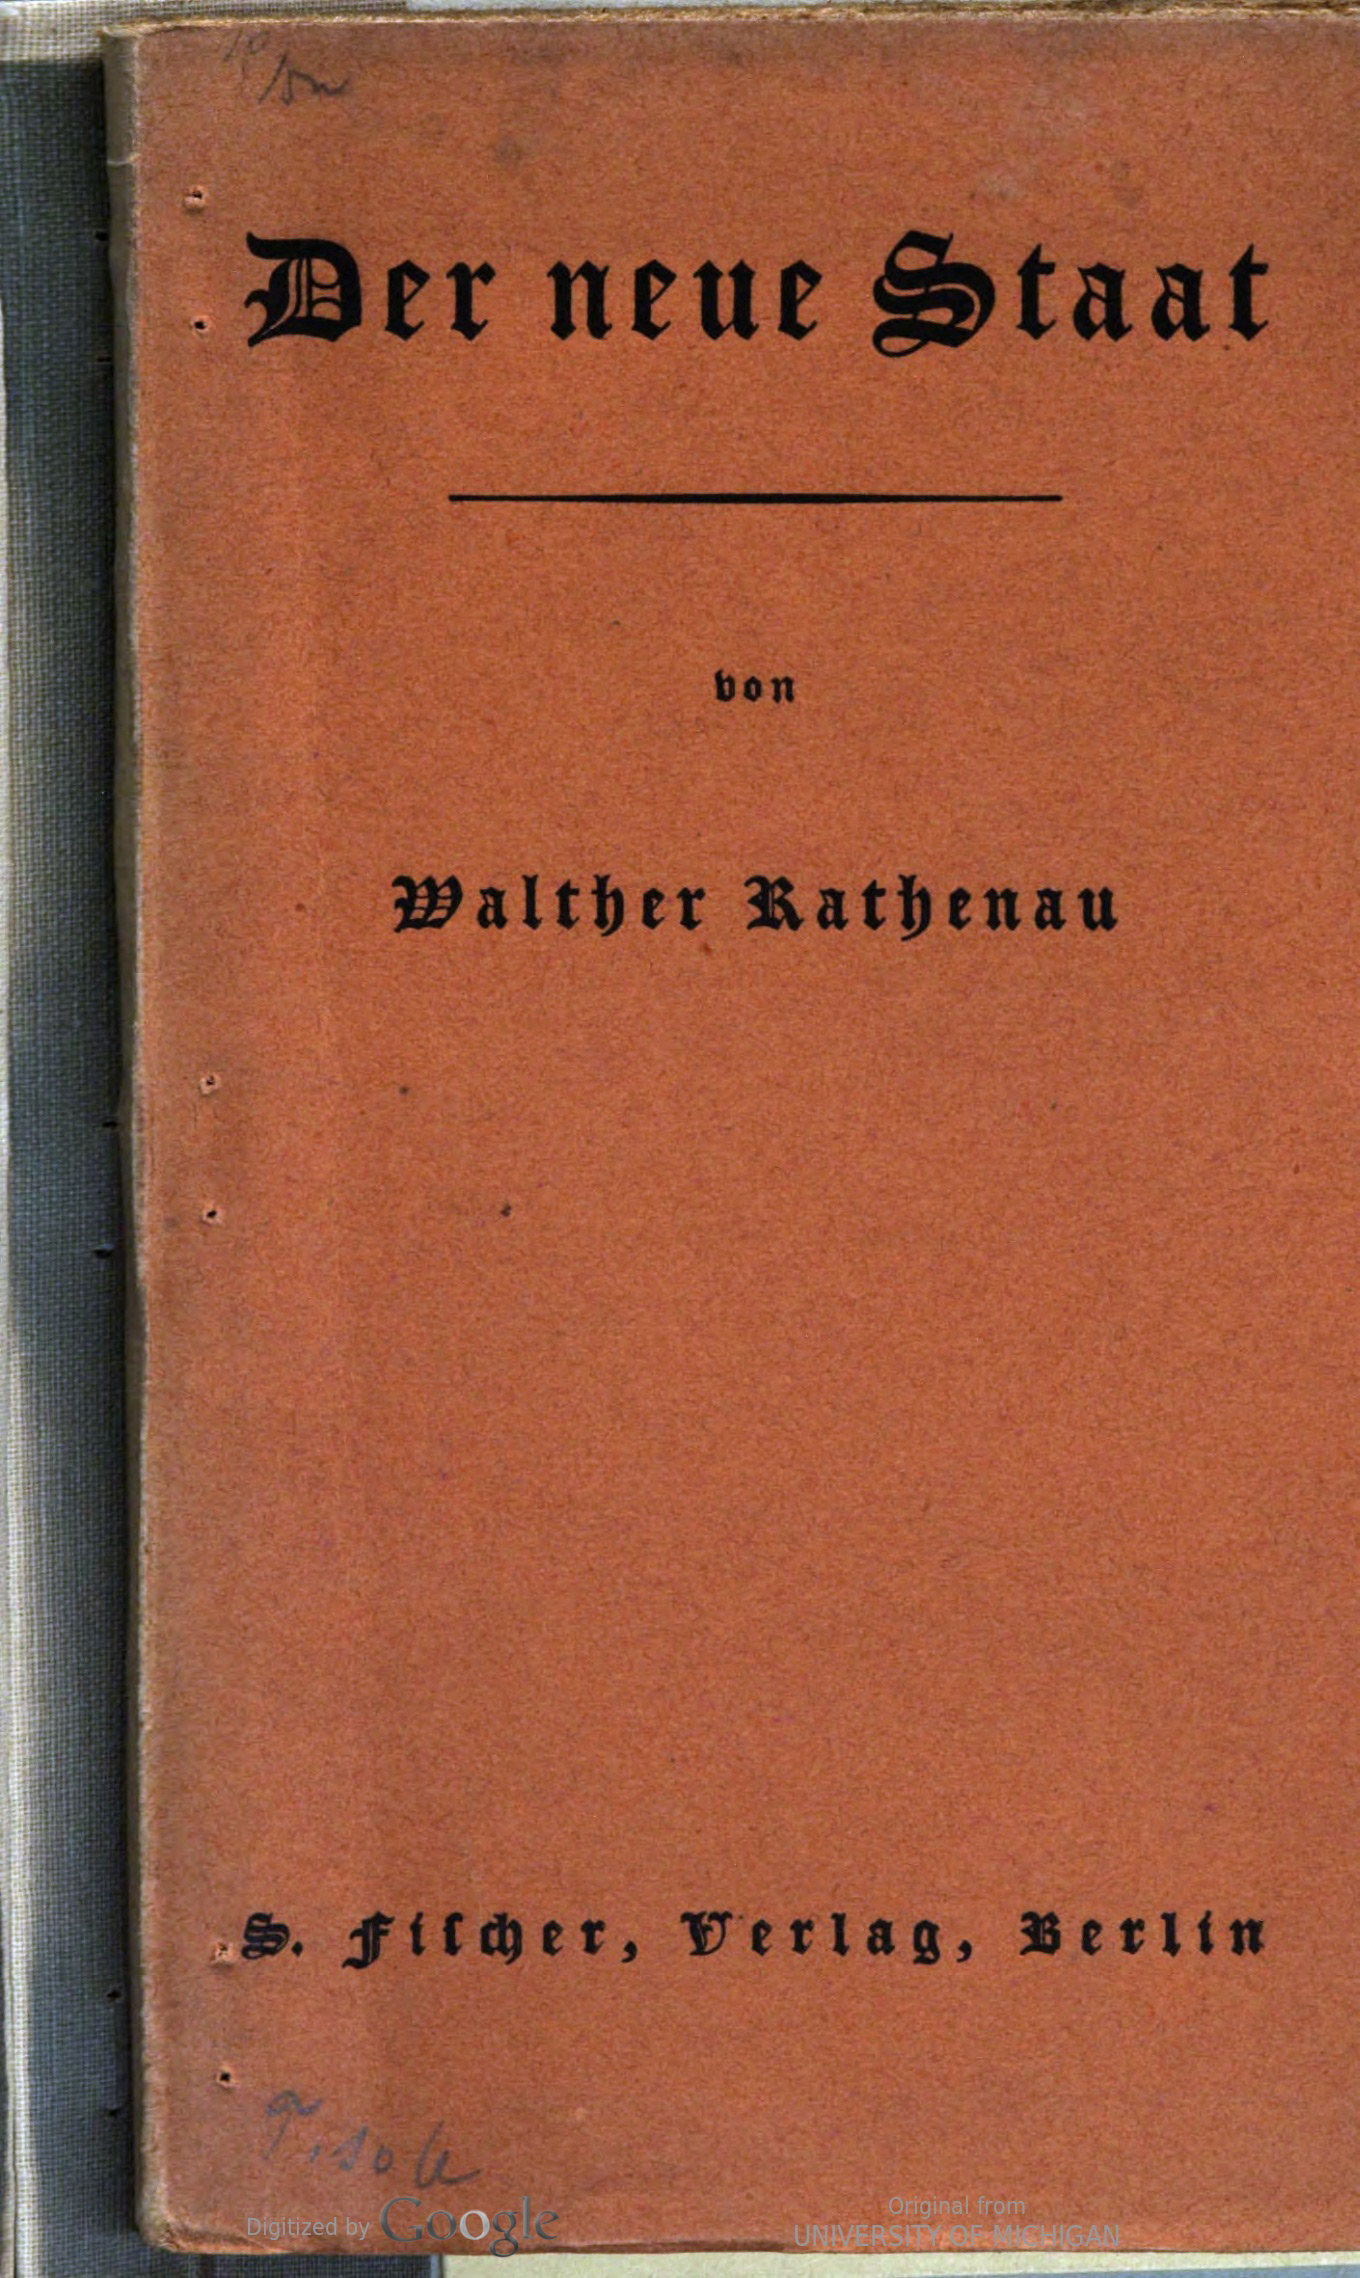 Cover of Der neue staat